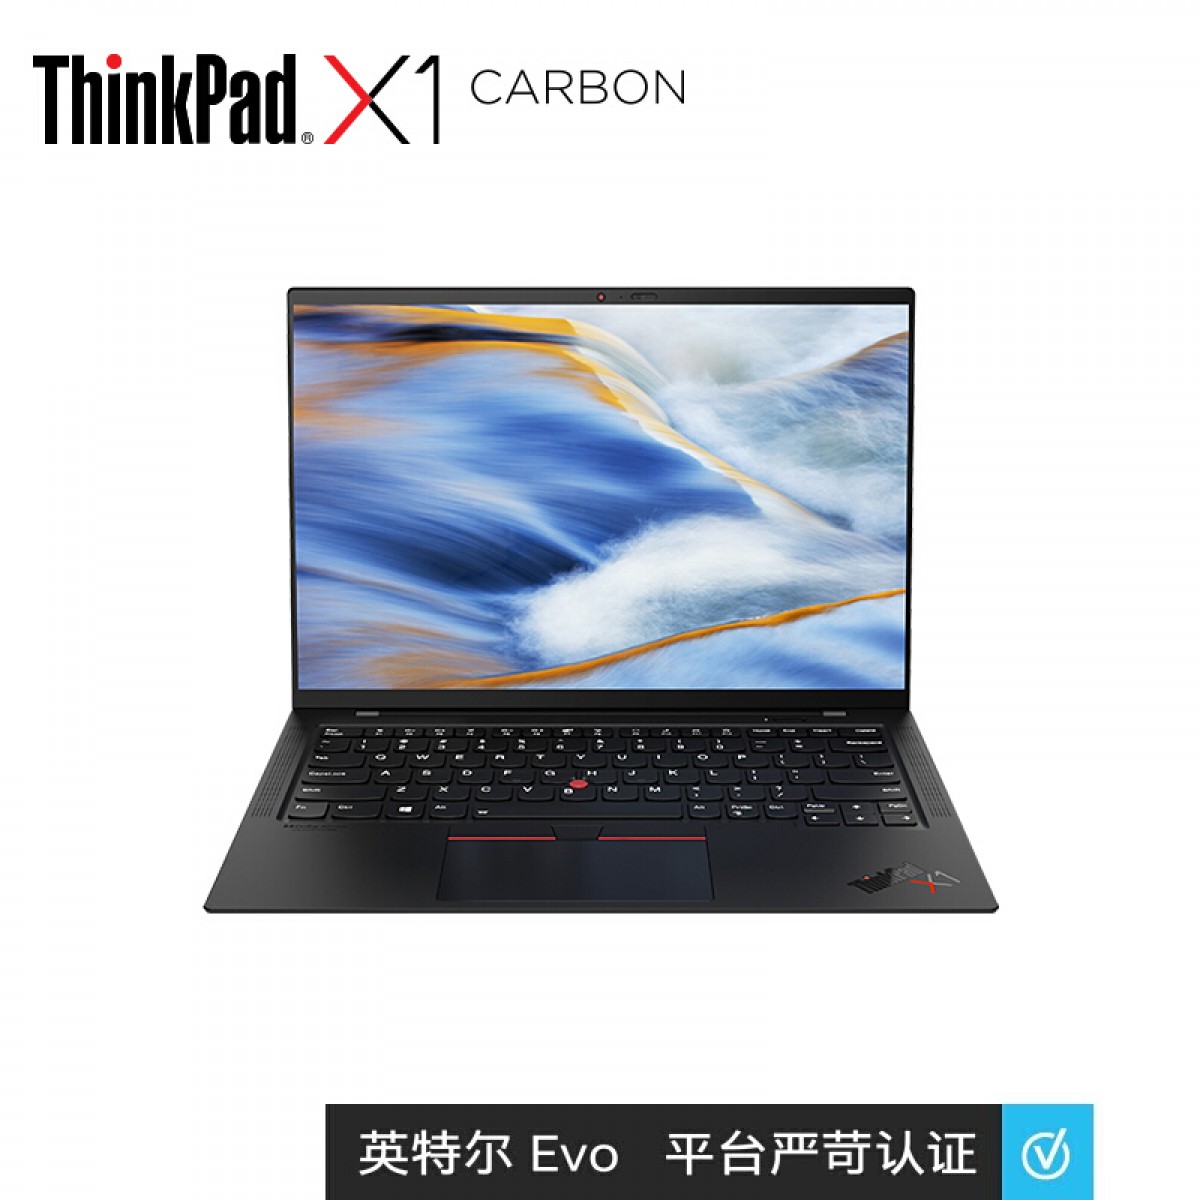 ThinkPad 笔记本电脑 X1 Carbon i7-1165G7 16G 1TSSD 集显 无光驱 14英寸 Win10家庭版 含包鼠 1年保 4G版